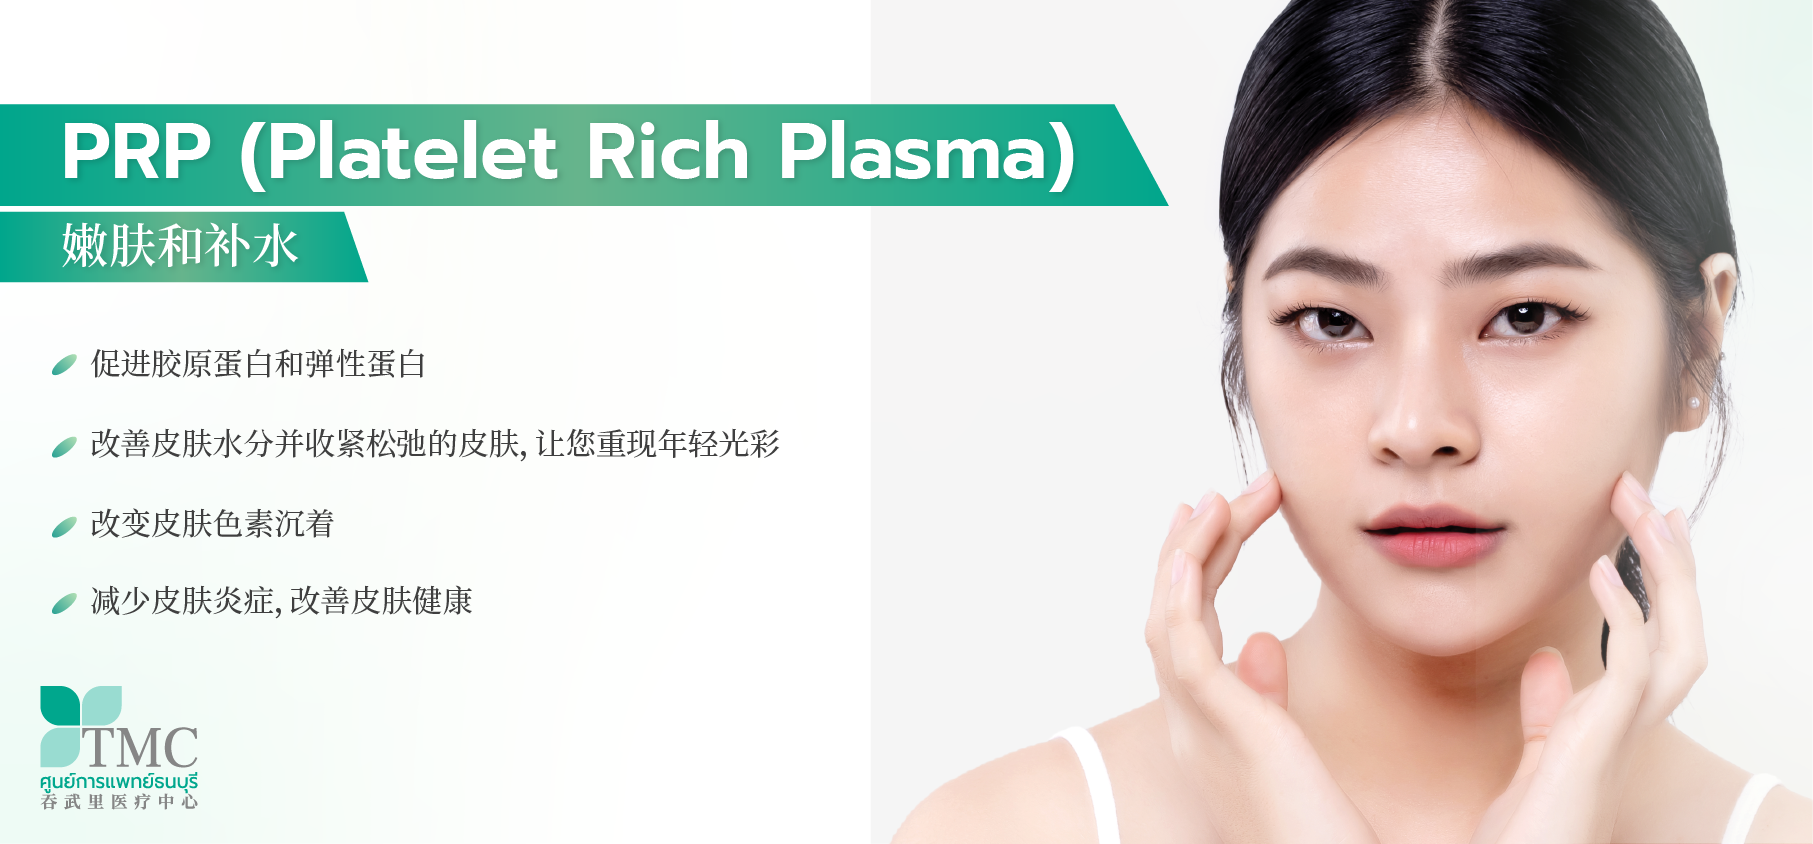 Platelet Rich Plasma (PRP) 嫩肤和补水